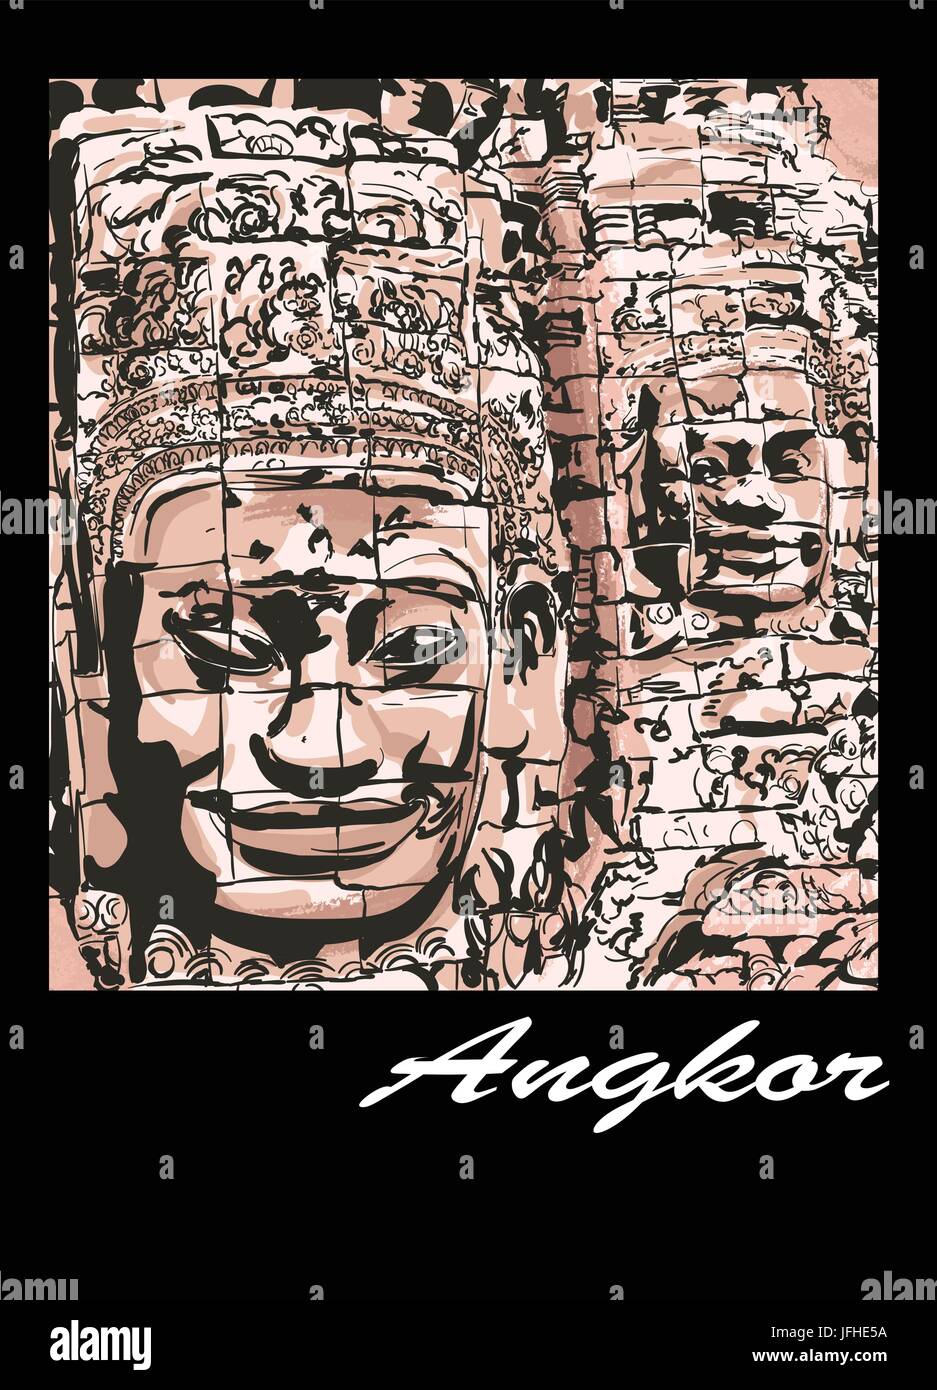 Angkor - the Bayon - Vector illustration Stock Vector